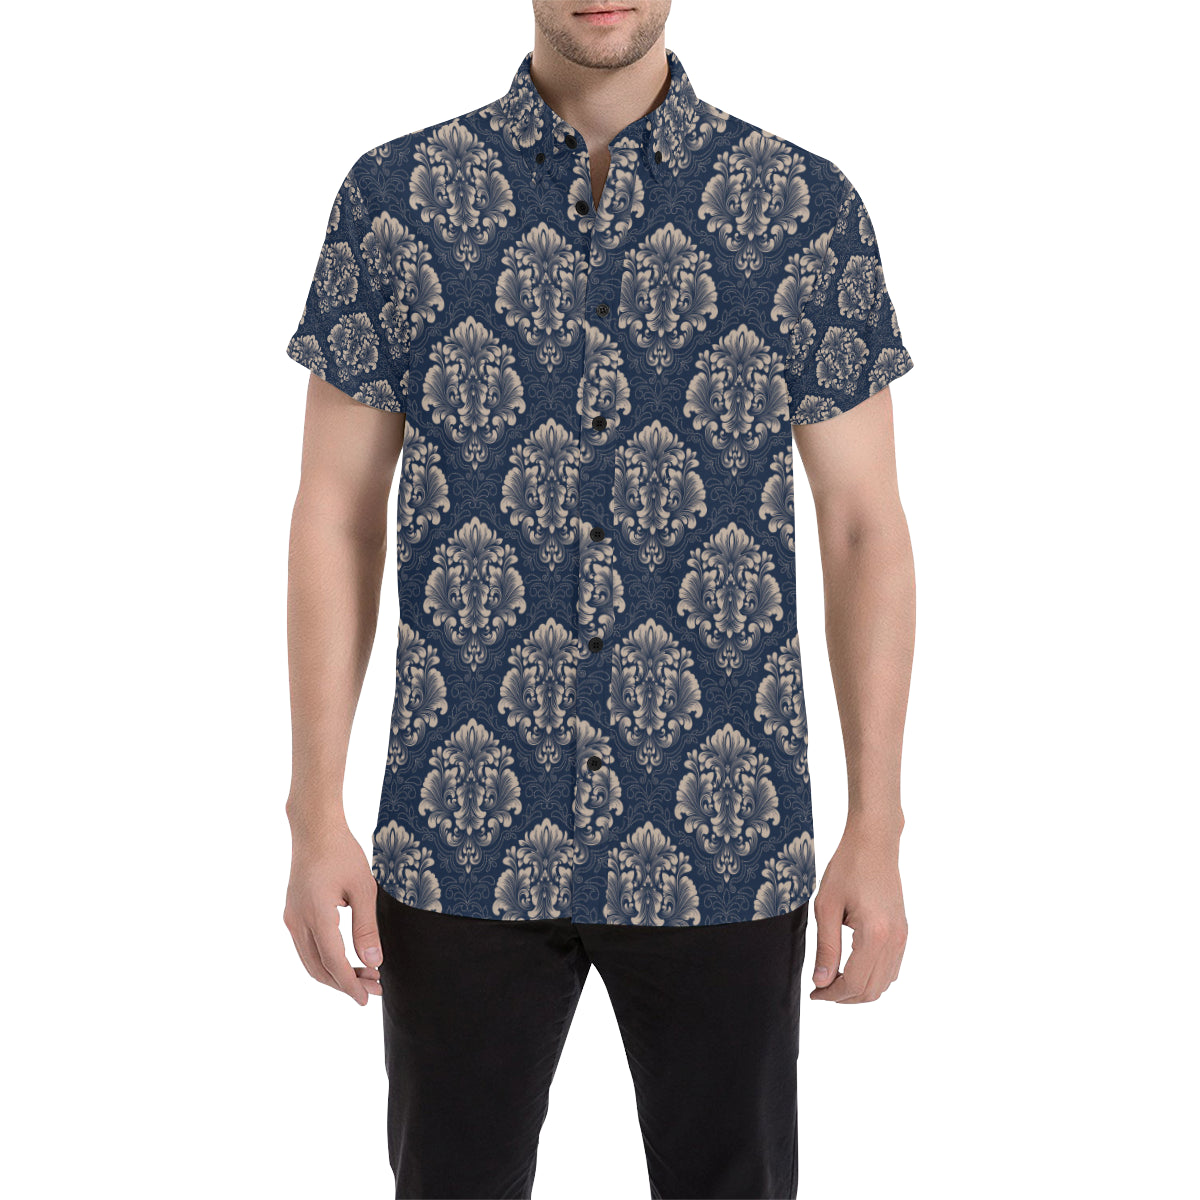 Damask Blue Luxury Print Pattern Men's Short Sleeve Button Up Shirt